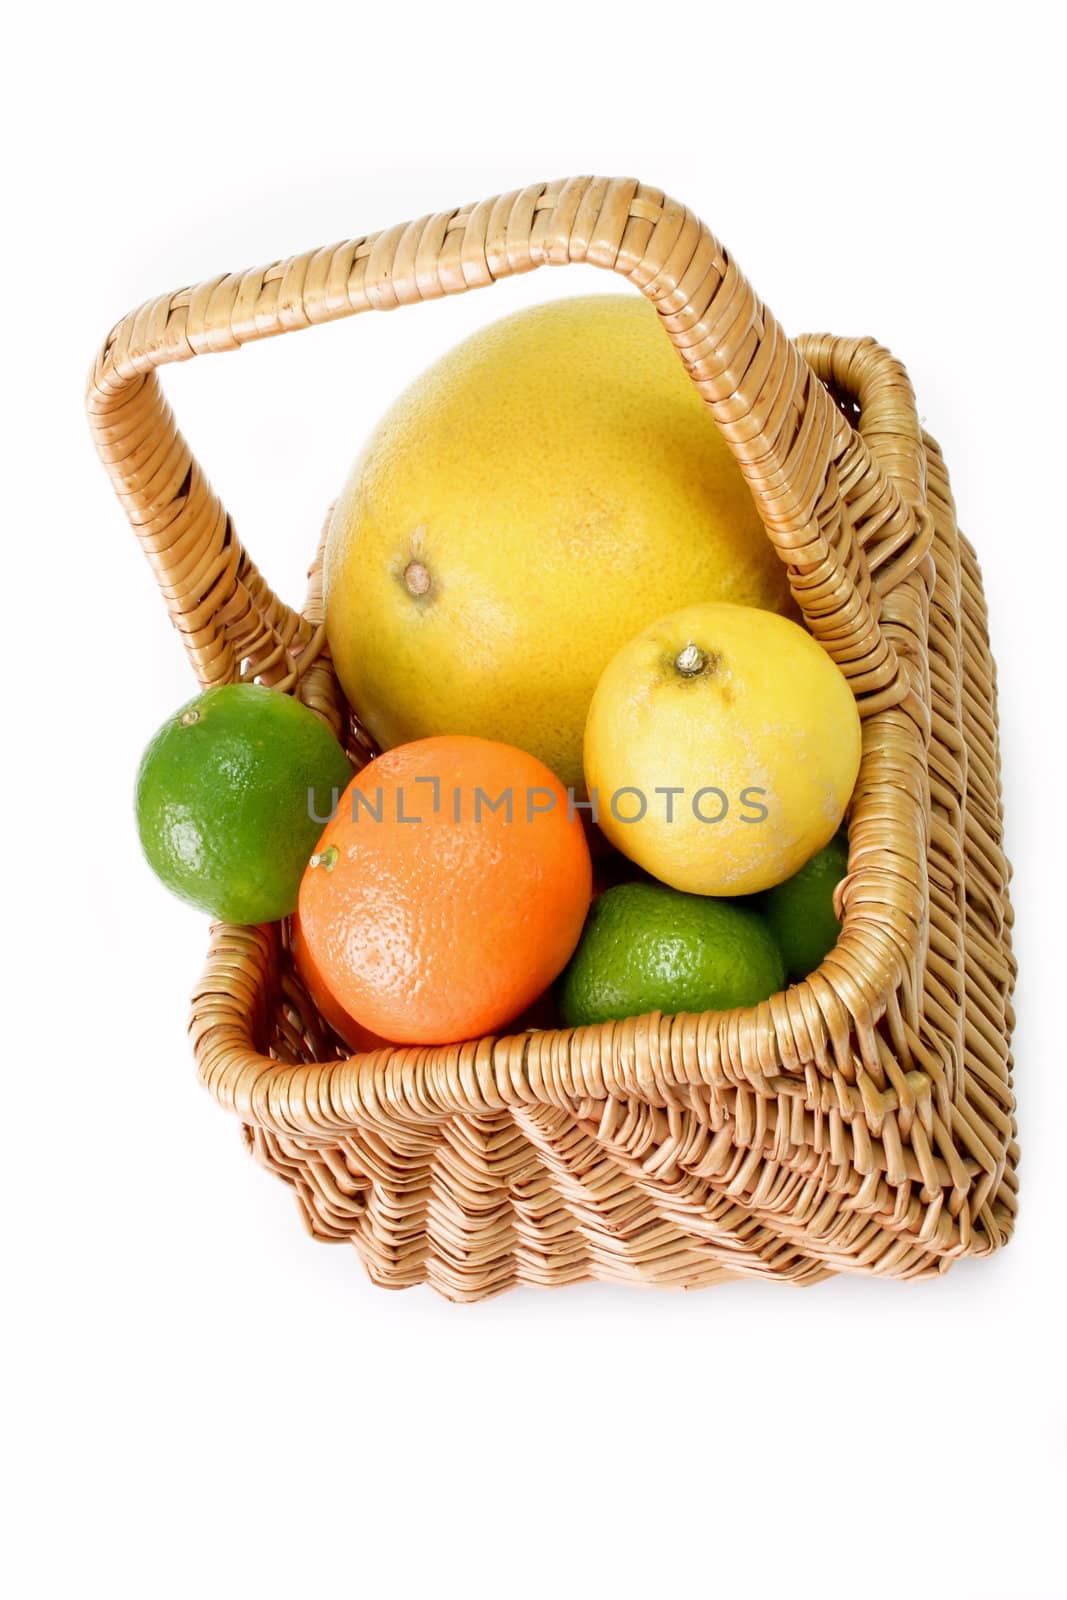 Juicy fruits by Teamarbeit